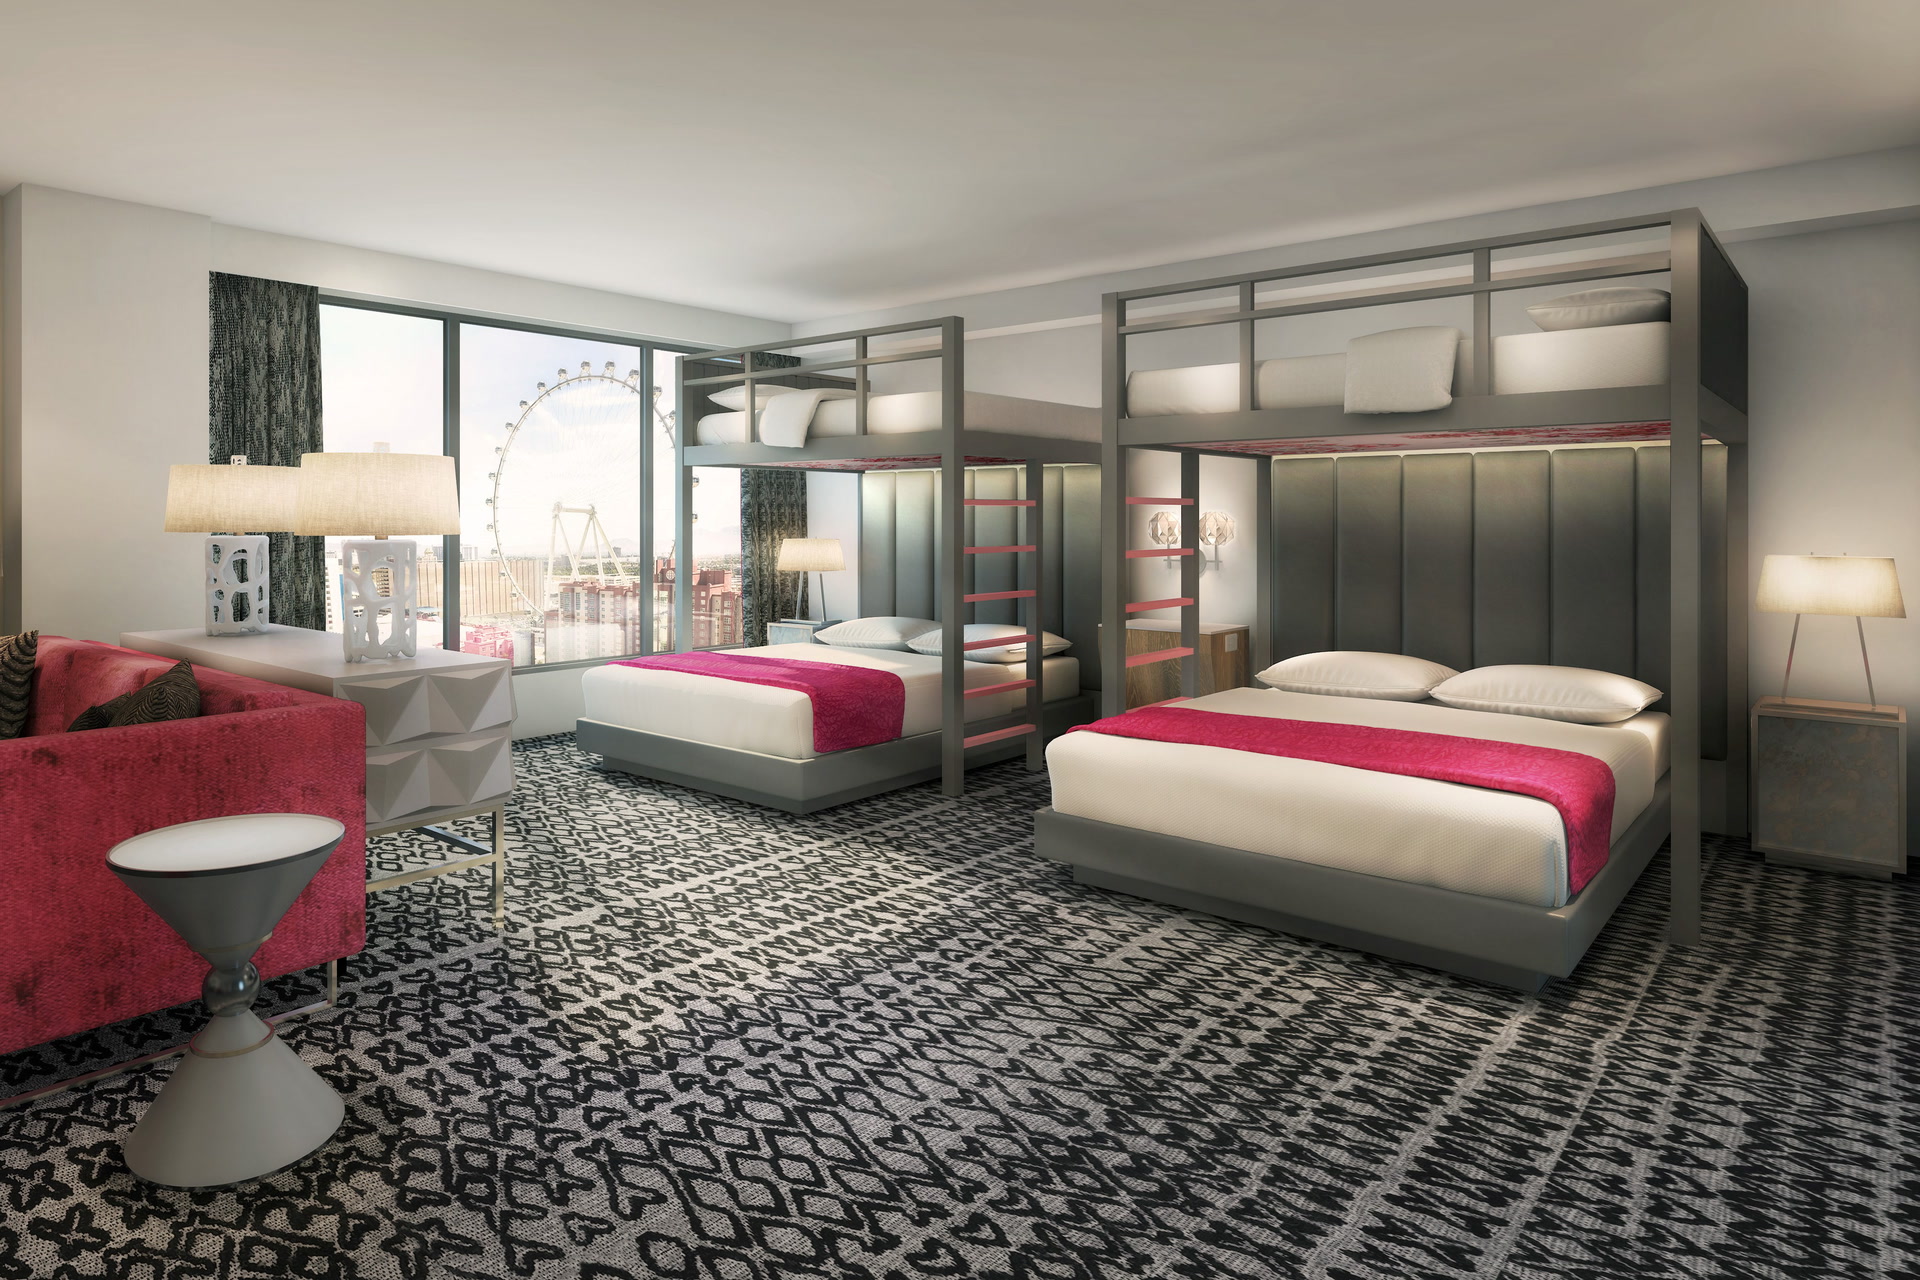 Bunk Bed Rooms Coming To Las Vegas Strip Hotel Las Vegas